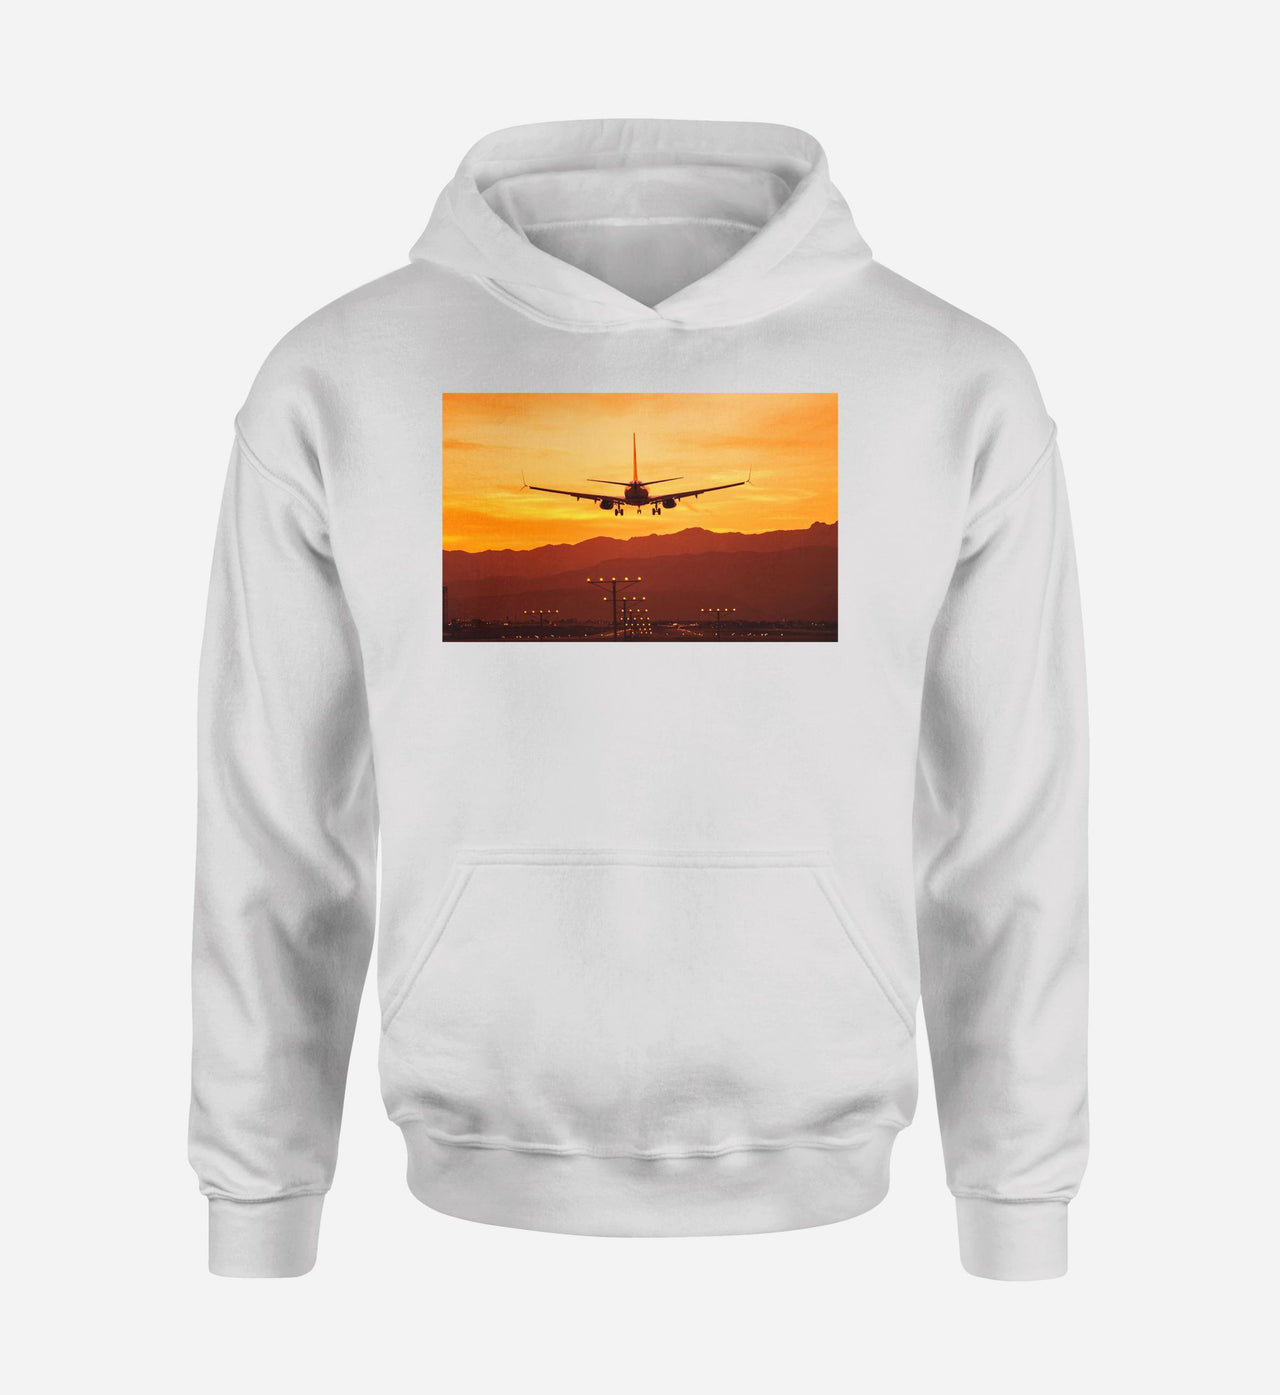 Landing Aircraft During Sunset Designed Hoodies